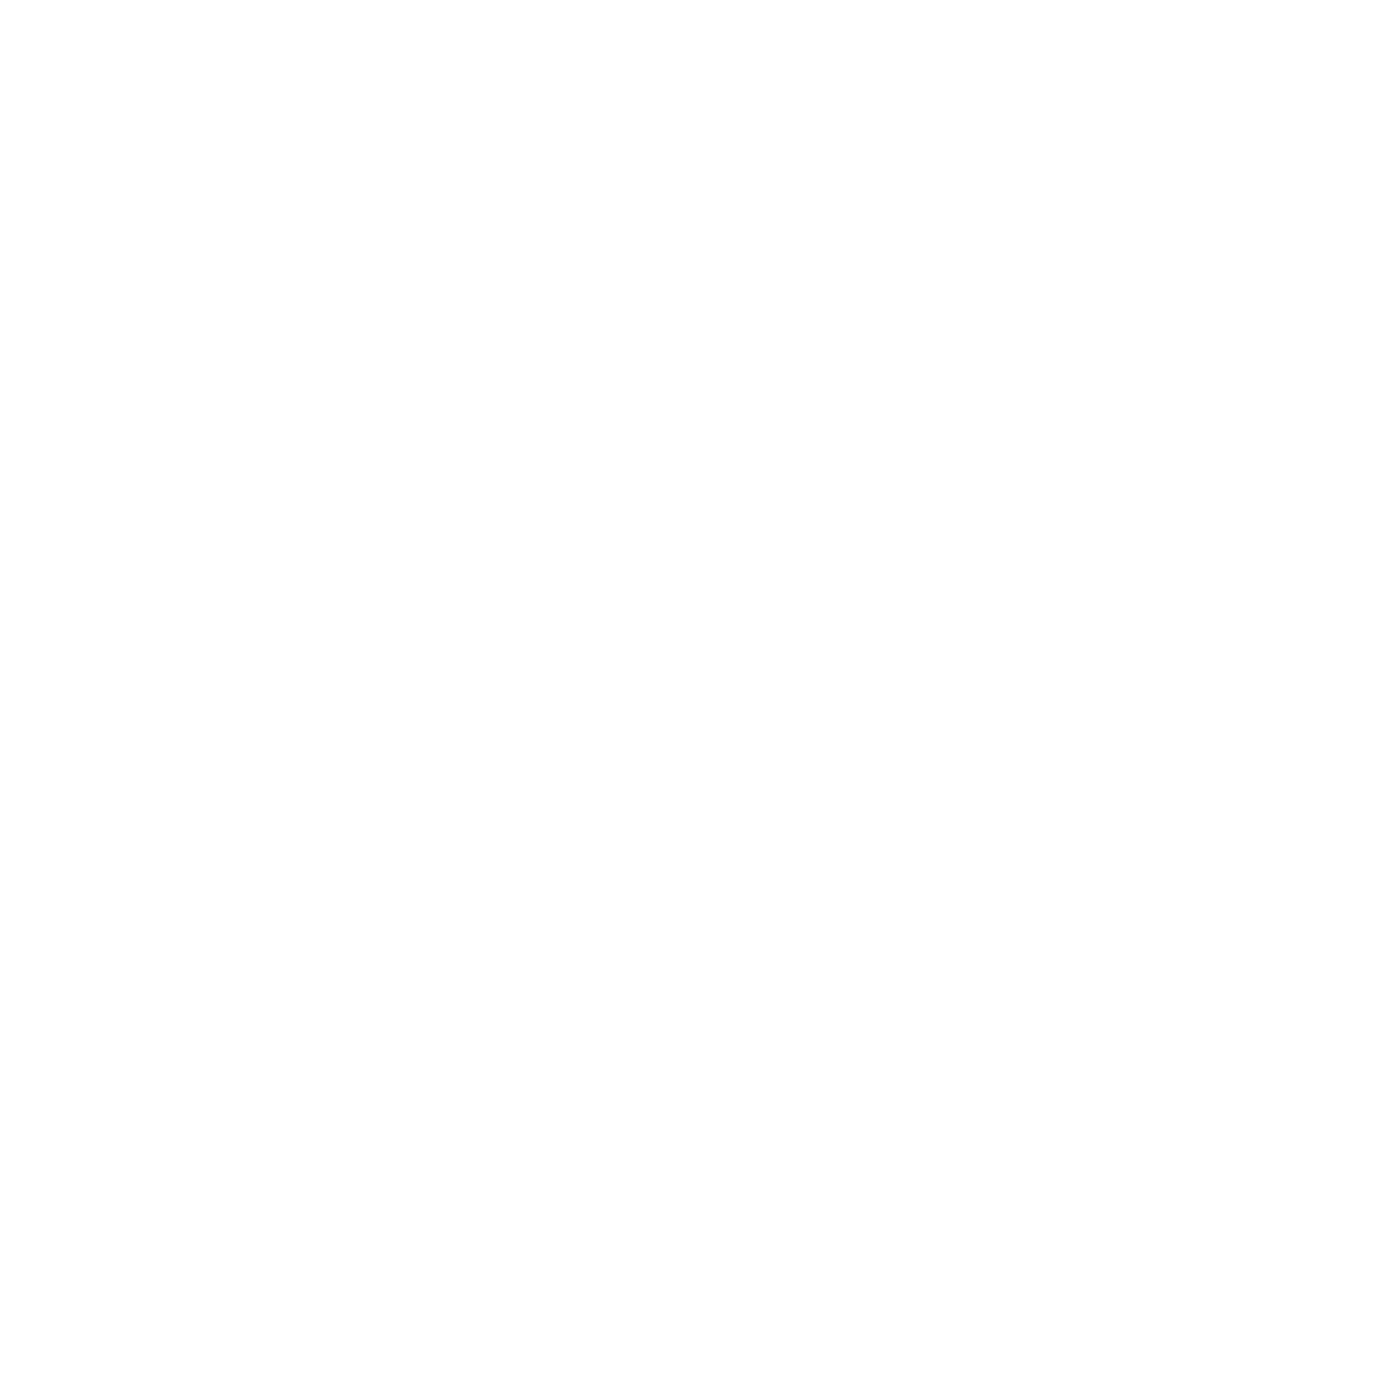 SCHOOL OF POLITICAL HOPE